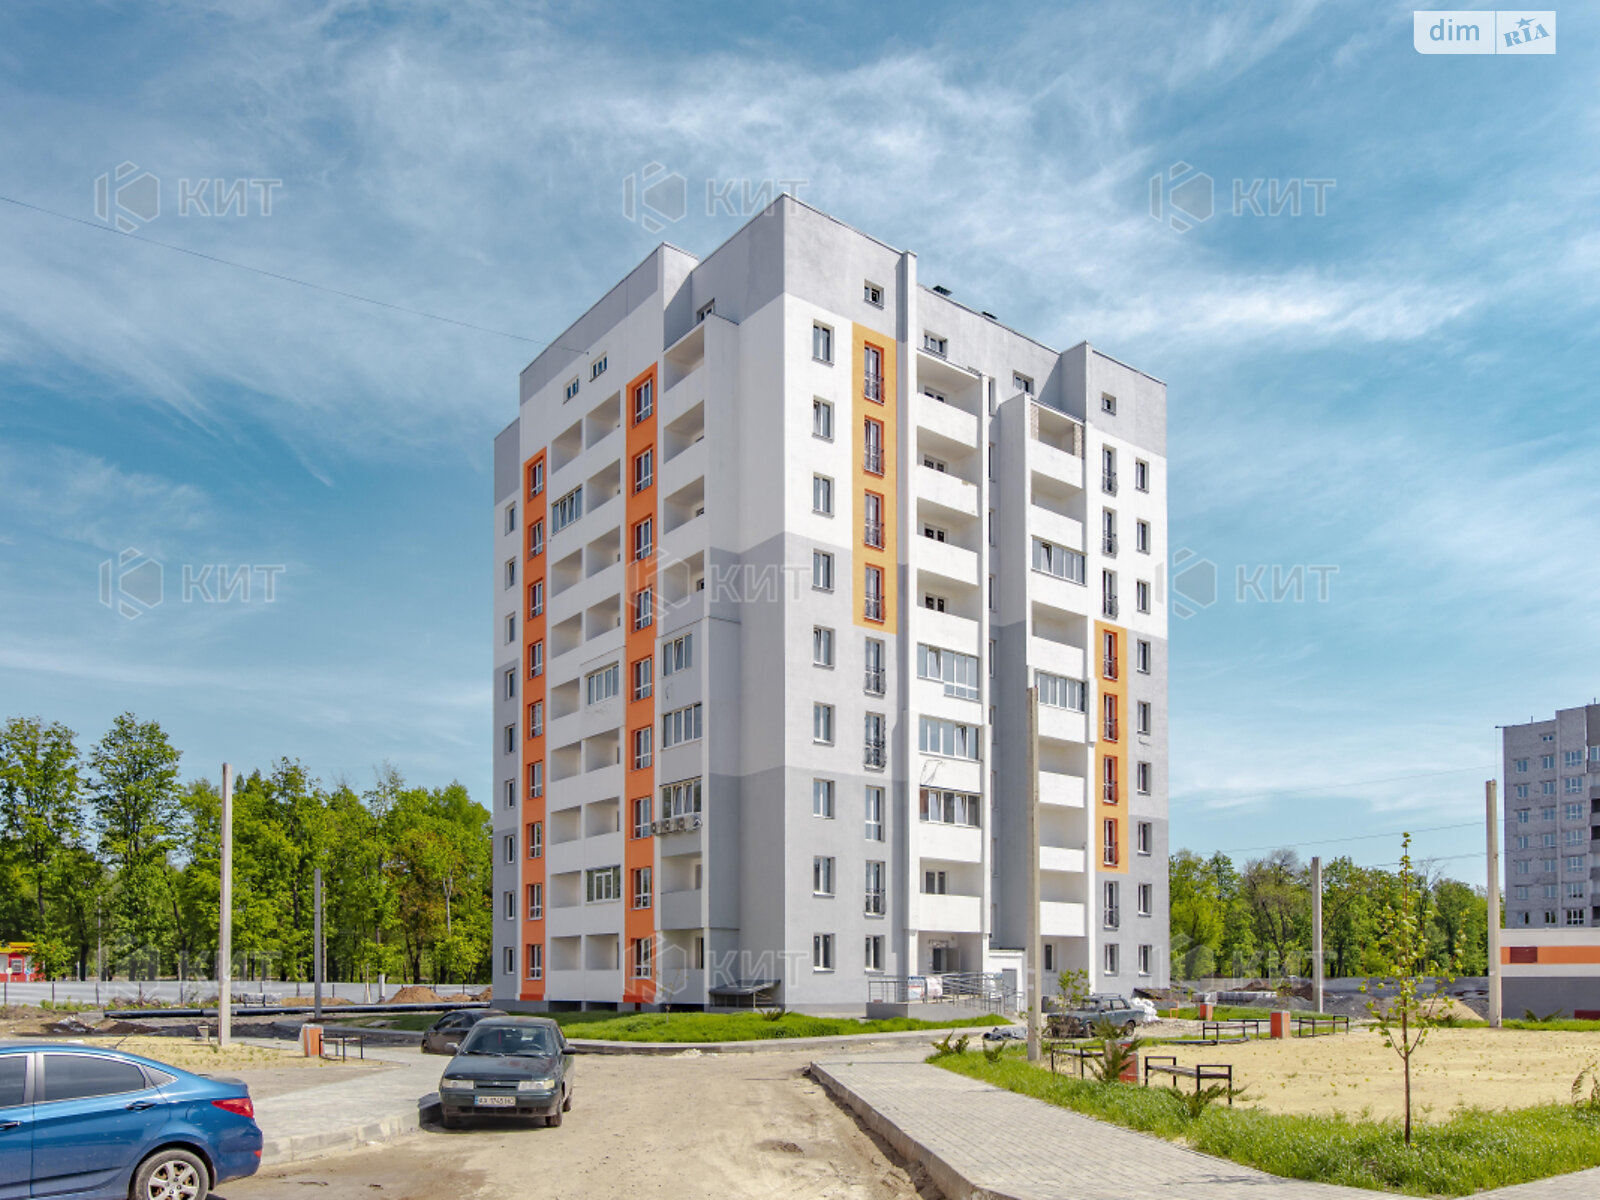 Продаж двокімнатної квартири в Харкові, на просп. Героїв Харкова 264, район ХТЗ фото 1